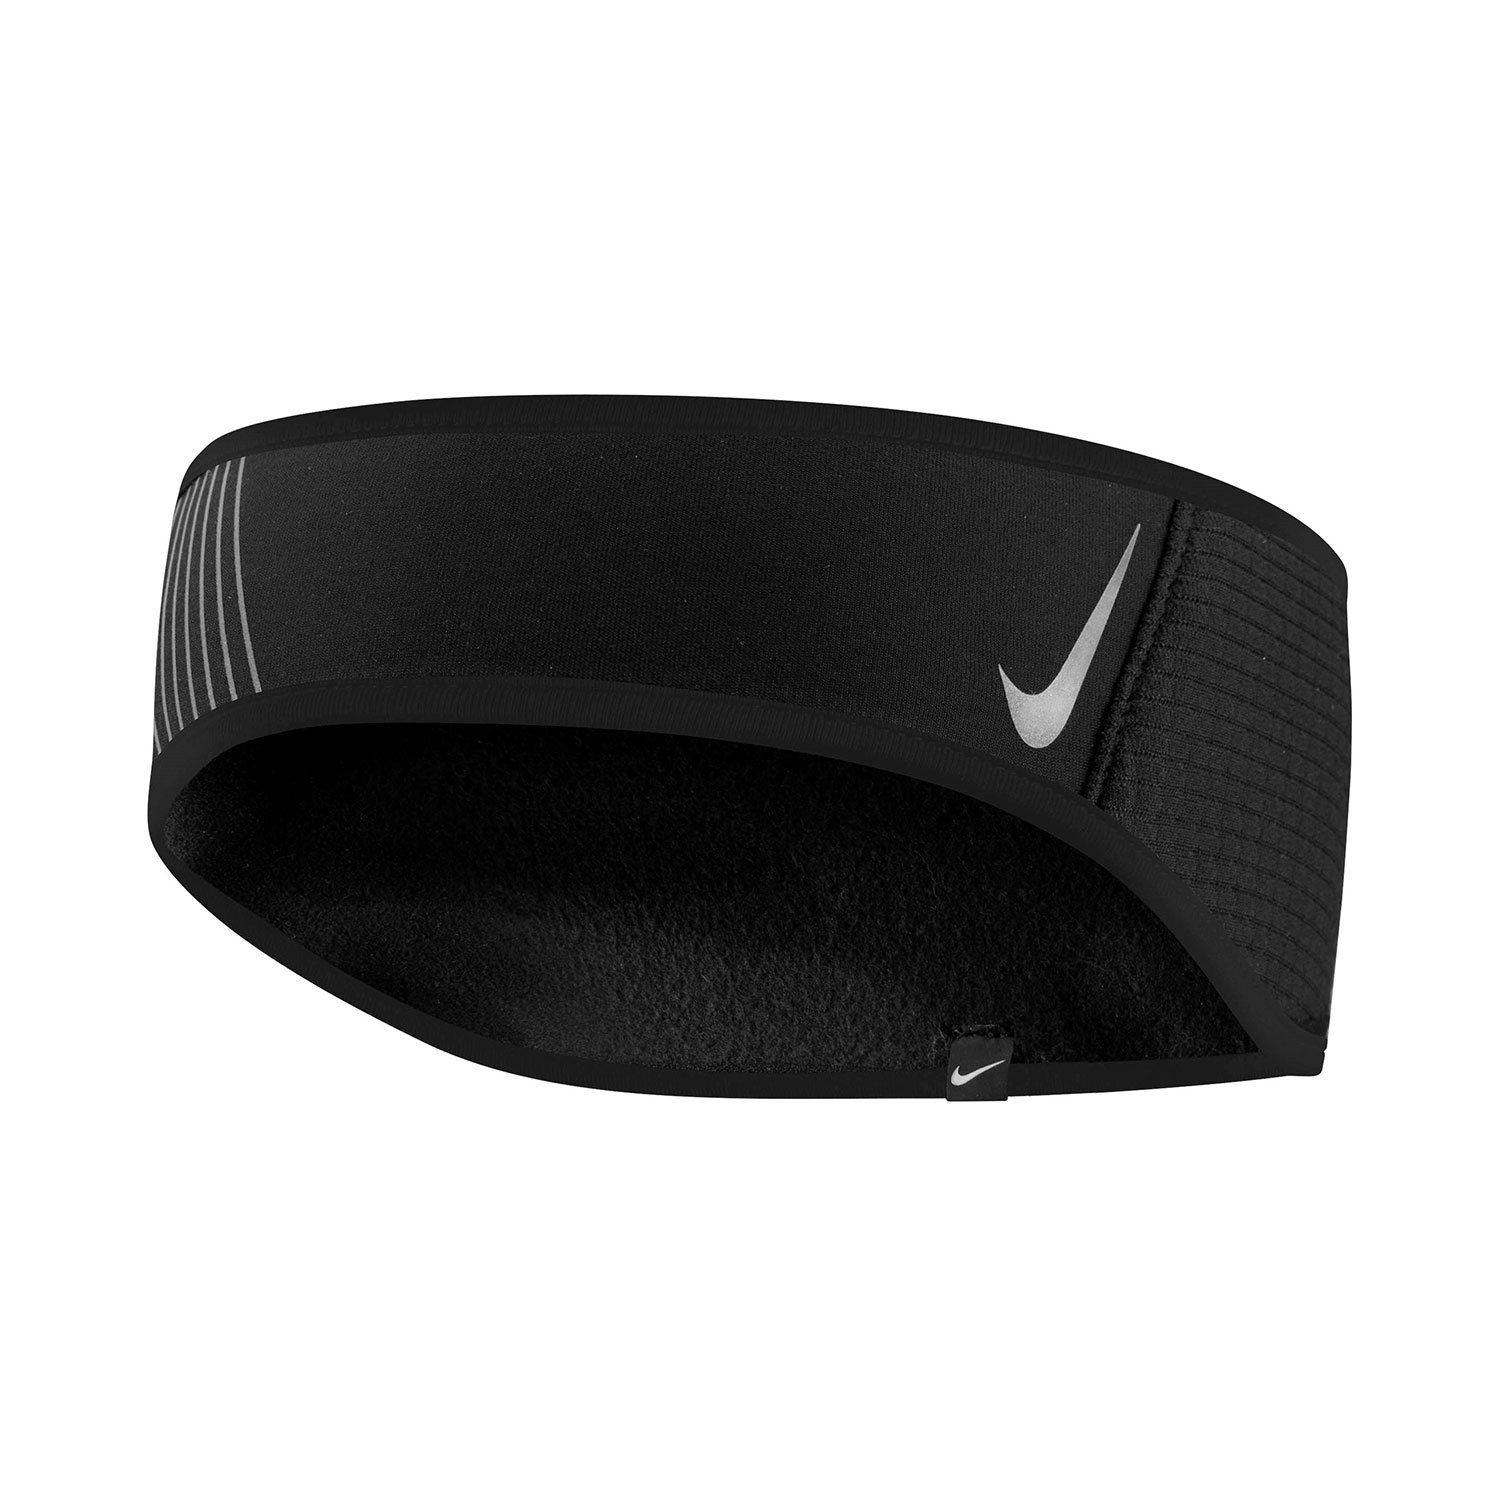 Nike 360 2.0 Band - Black/Silver